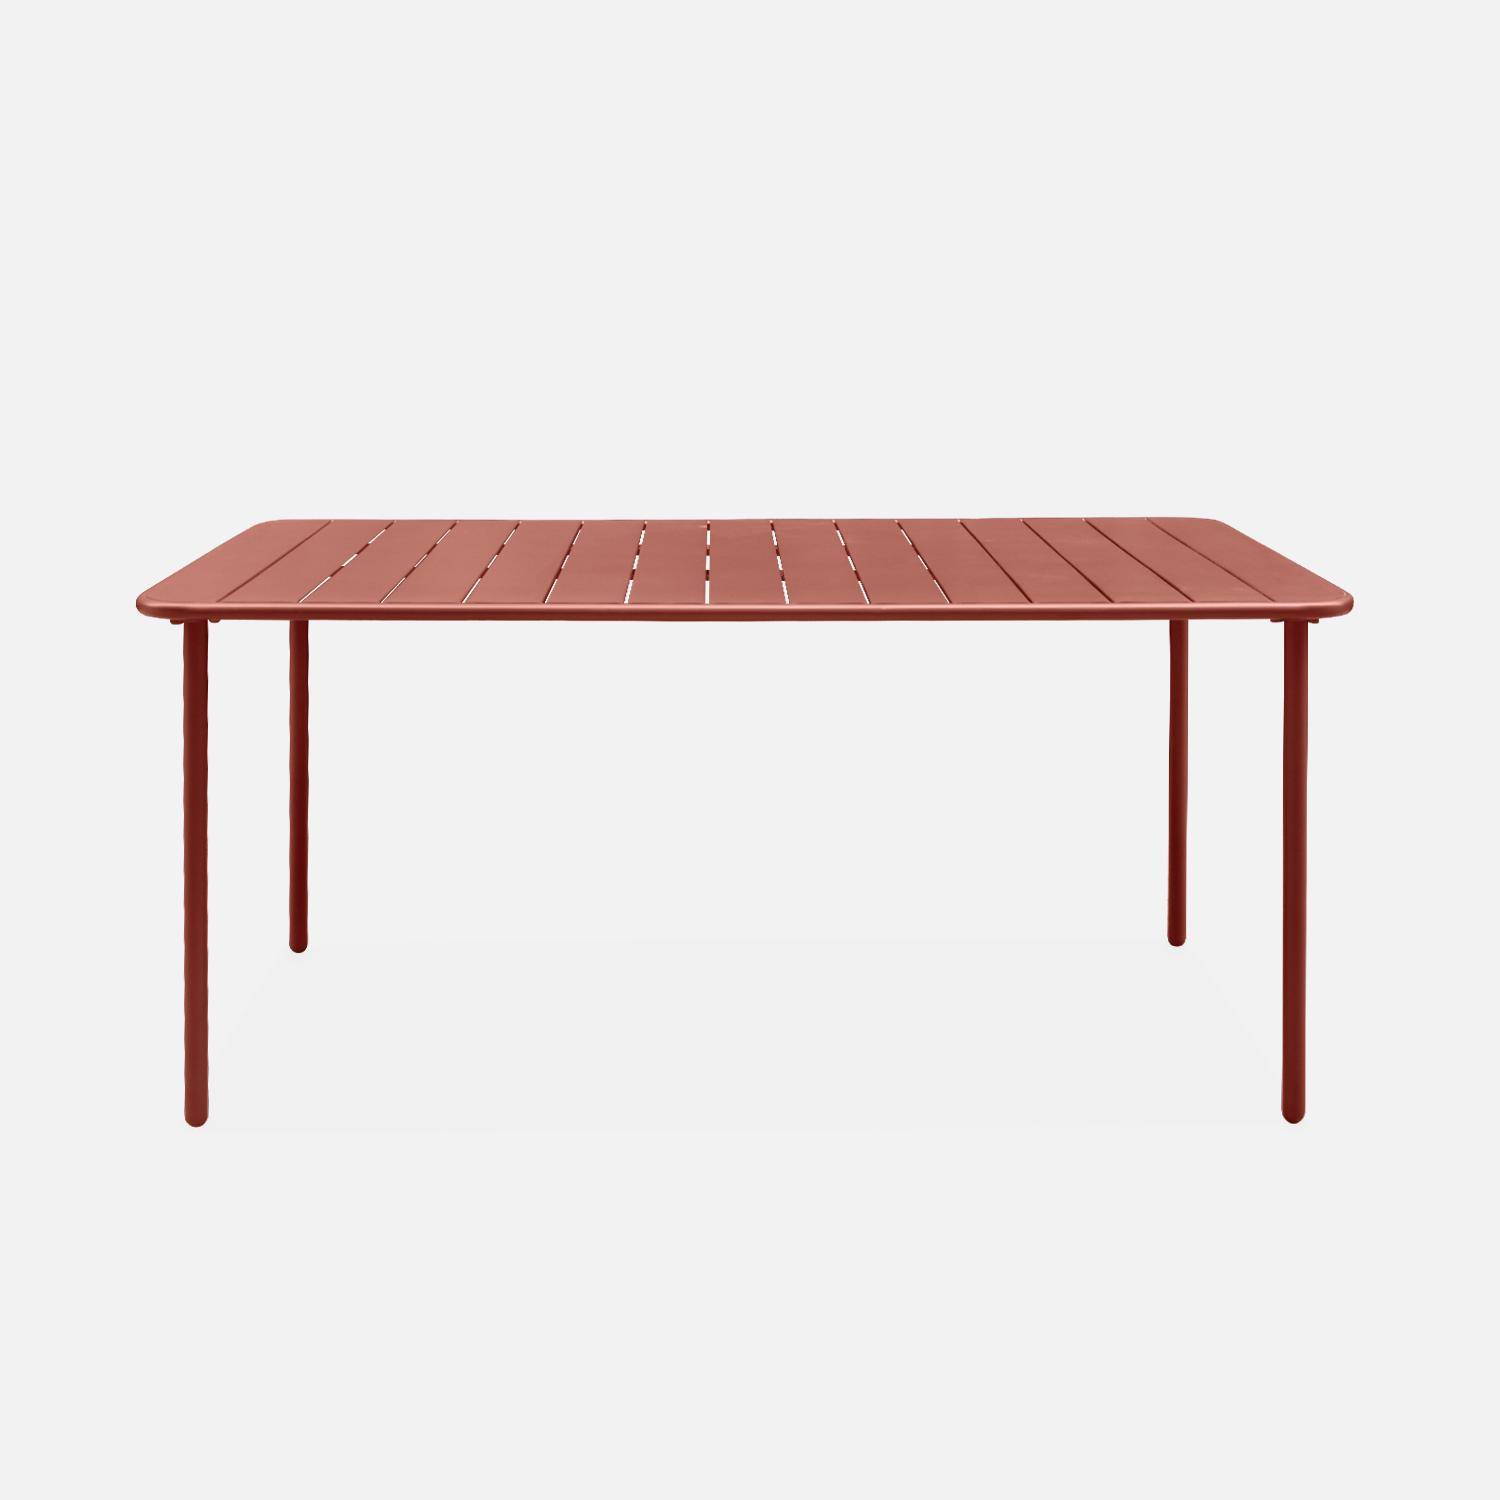 6-8 Seater metal garden table, 160x90xH72.5cm, Terracotta,sweeek,Photo5